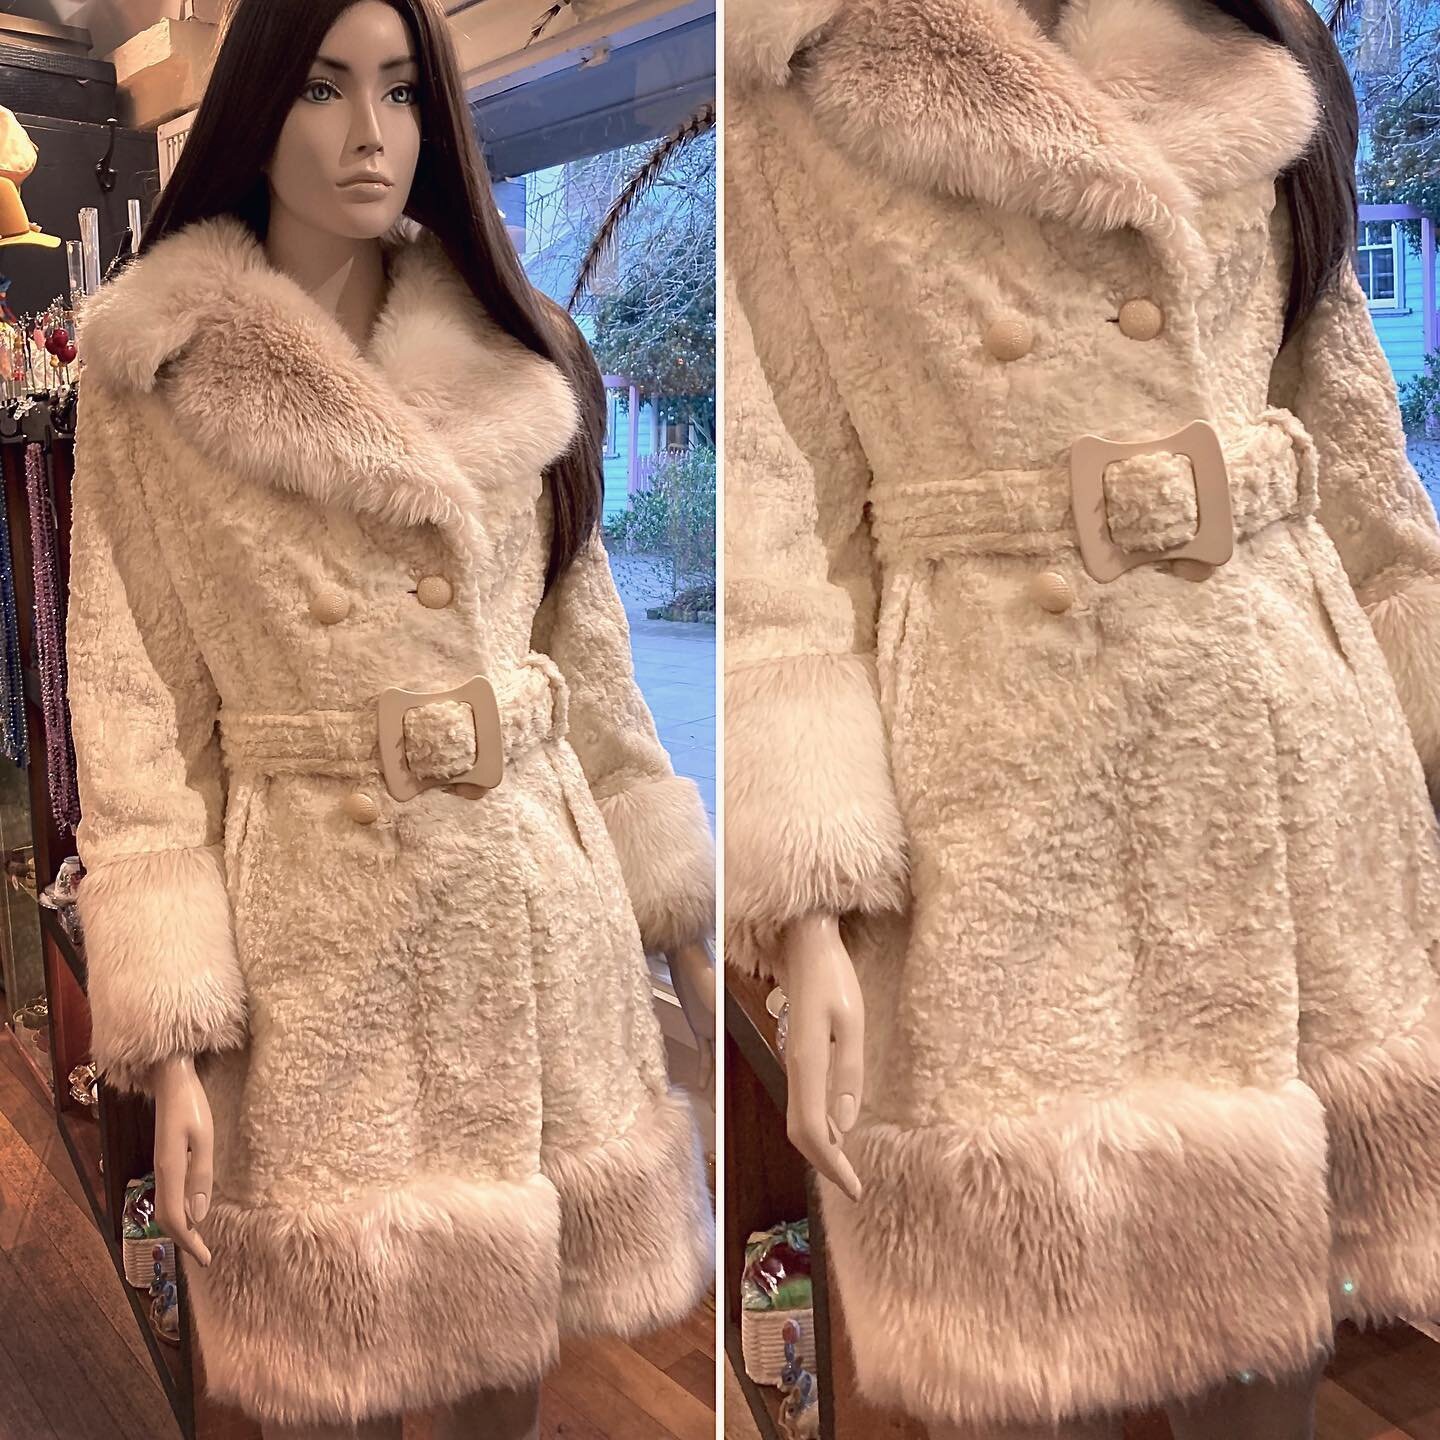 Super lush 1960s faux fur coat with fab collar, trim and belt 😻 just stunning! SOLD
#vintage #1960s #1960sfashion #vintagecoat #fauxfur #winterfashion #leuravintage